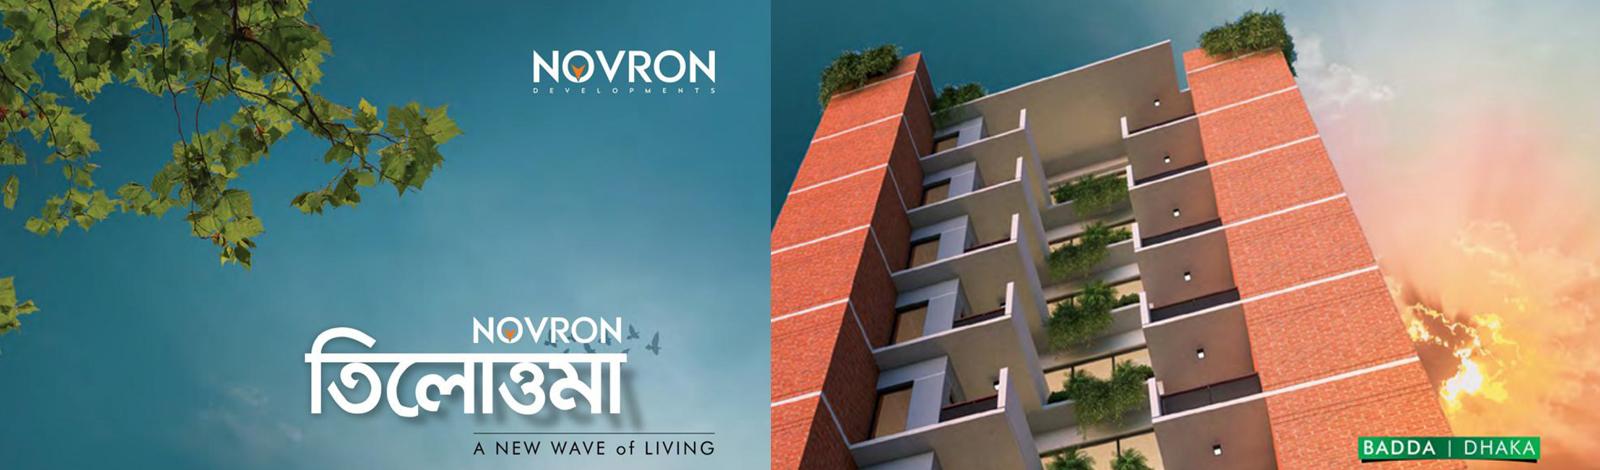 Novron Developments Ltd. banner